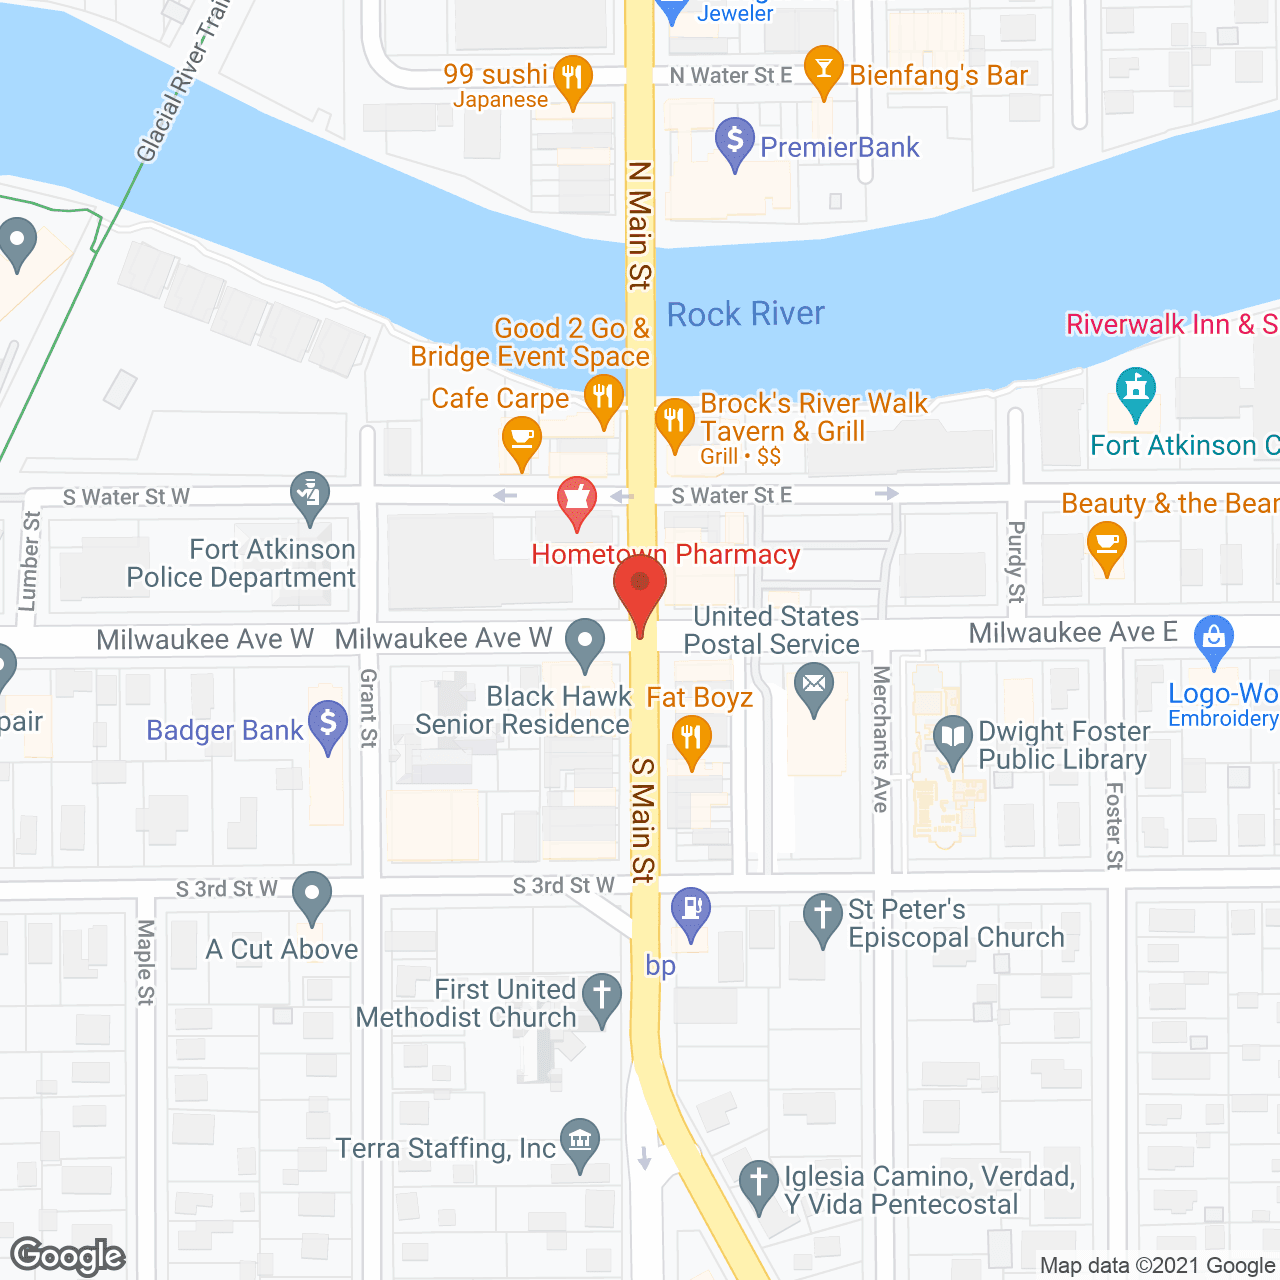 Black Hawk Senior Residence in google map